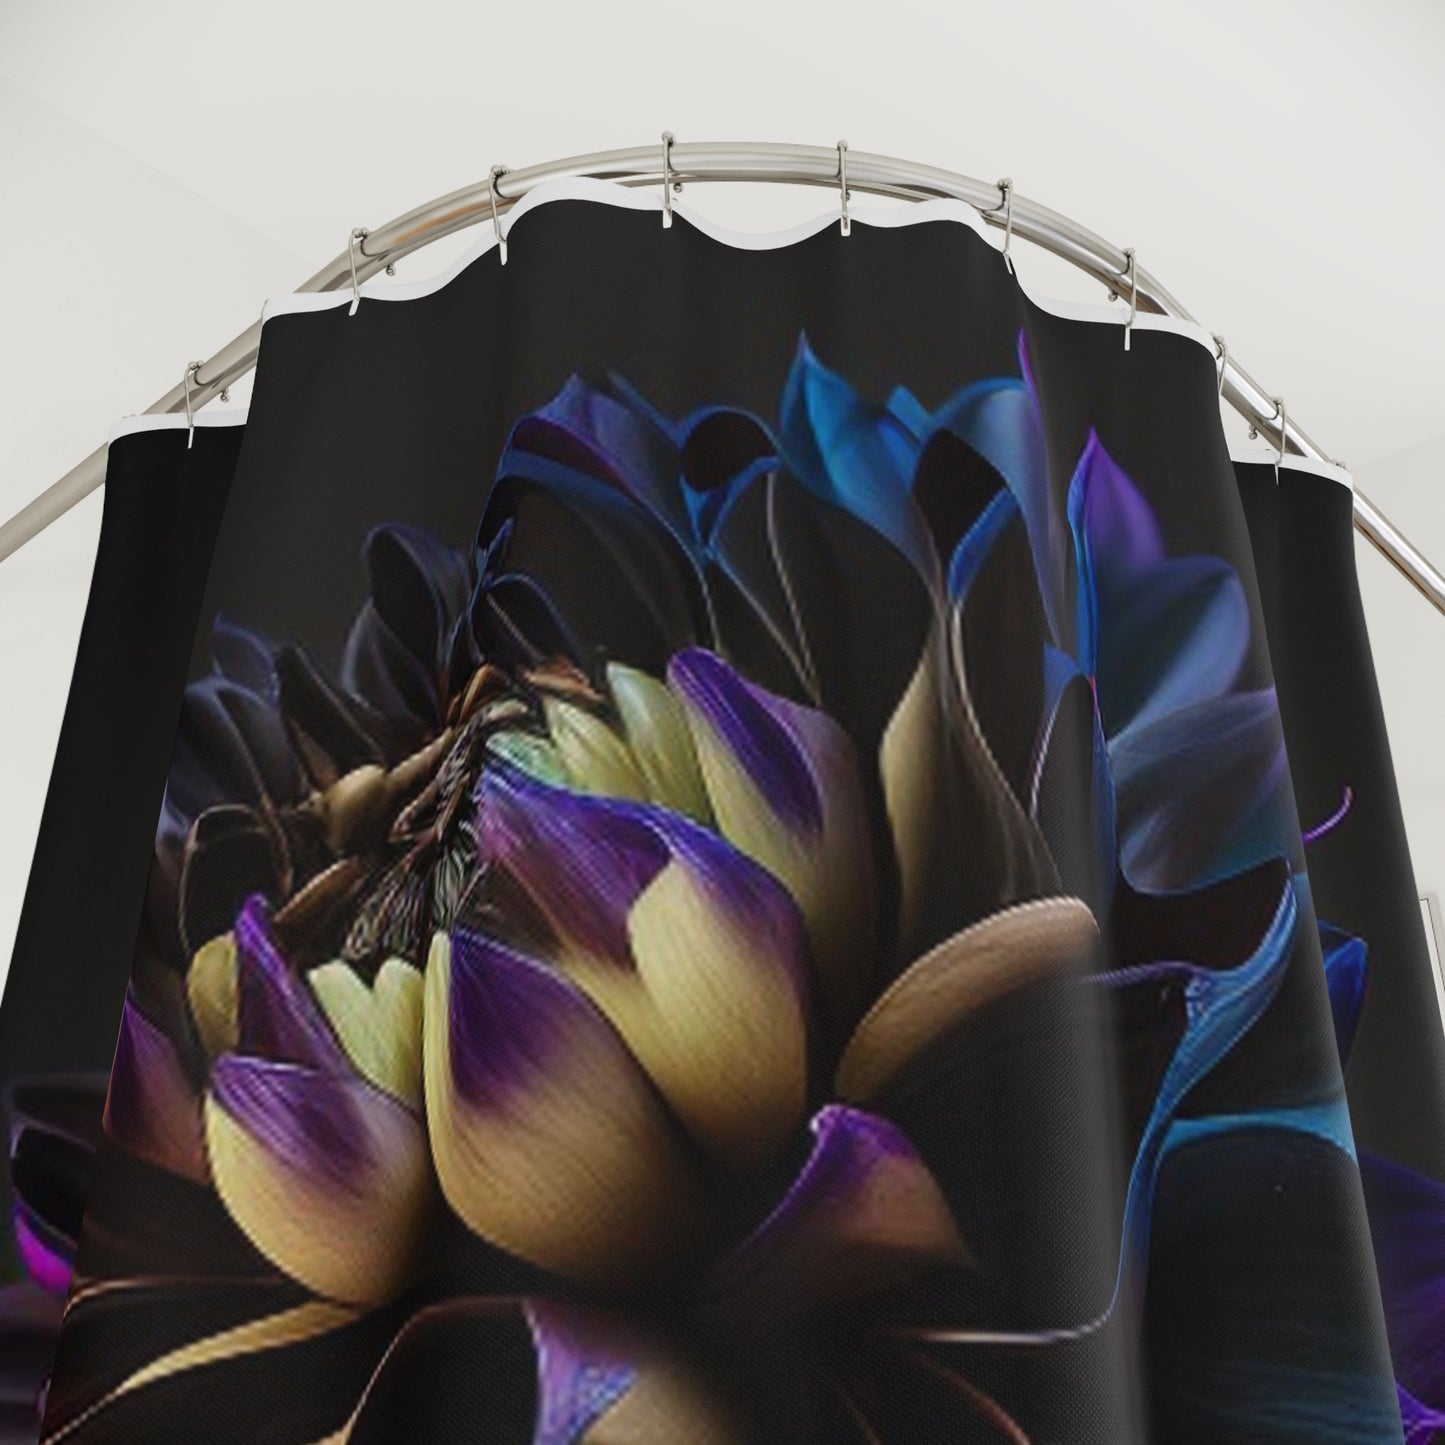 Polyester Shower Curtain Dahlia Purple 1